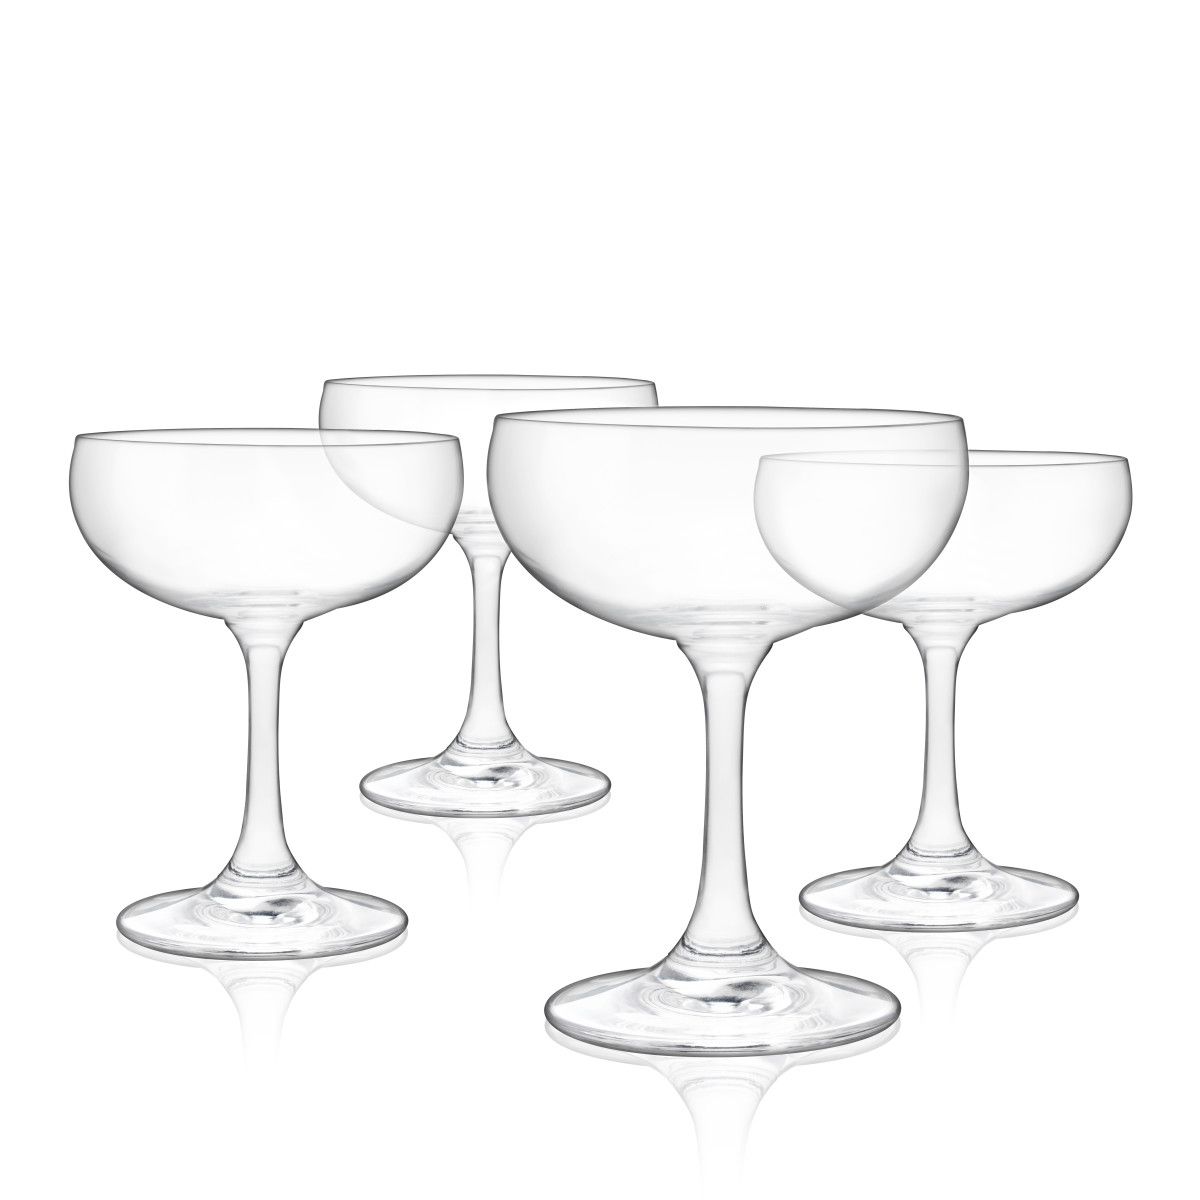 Manhattan Martini Glasses, Set of 4 by True